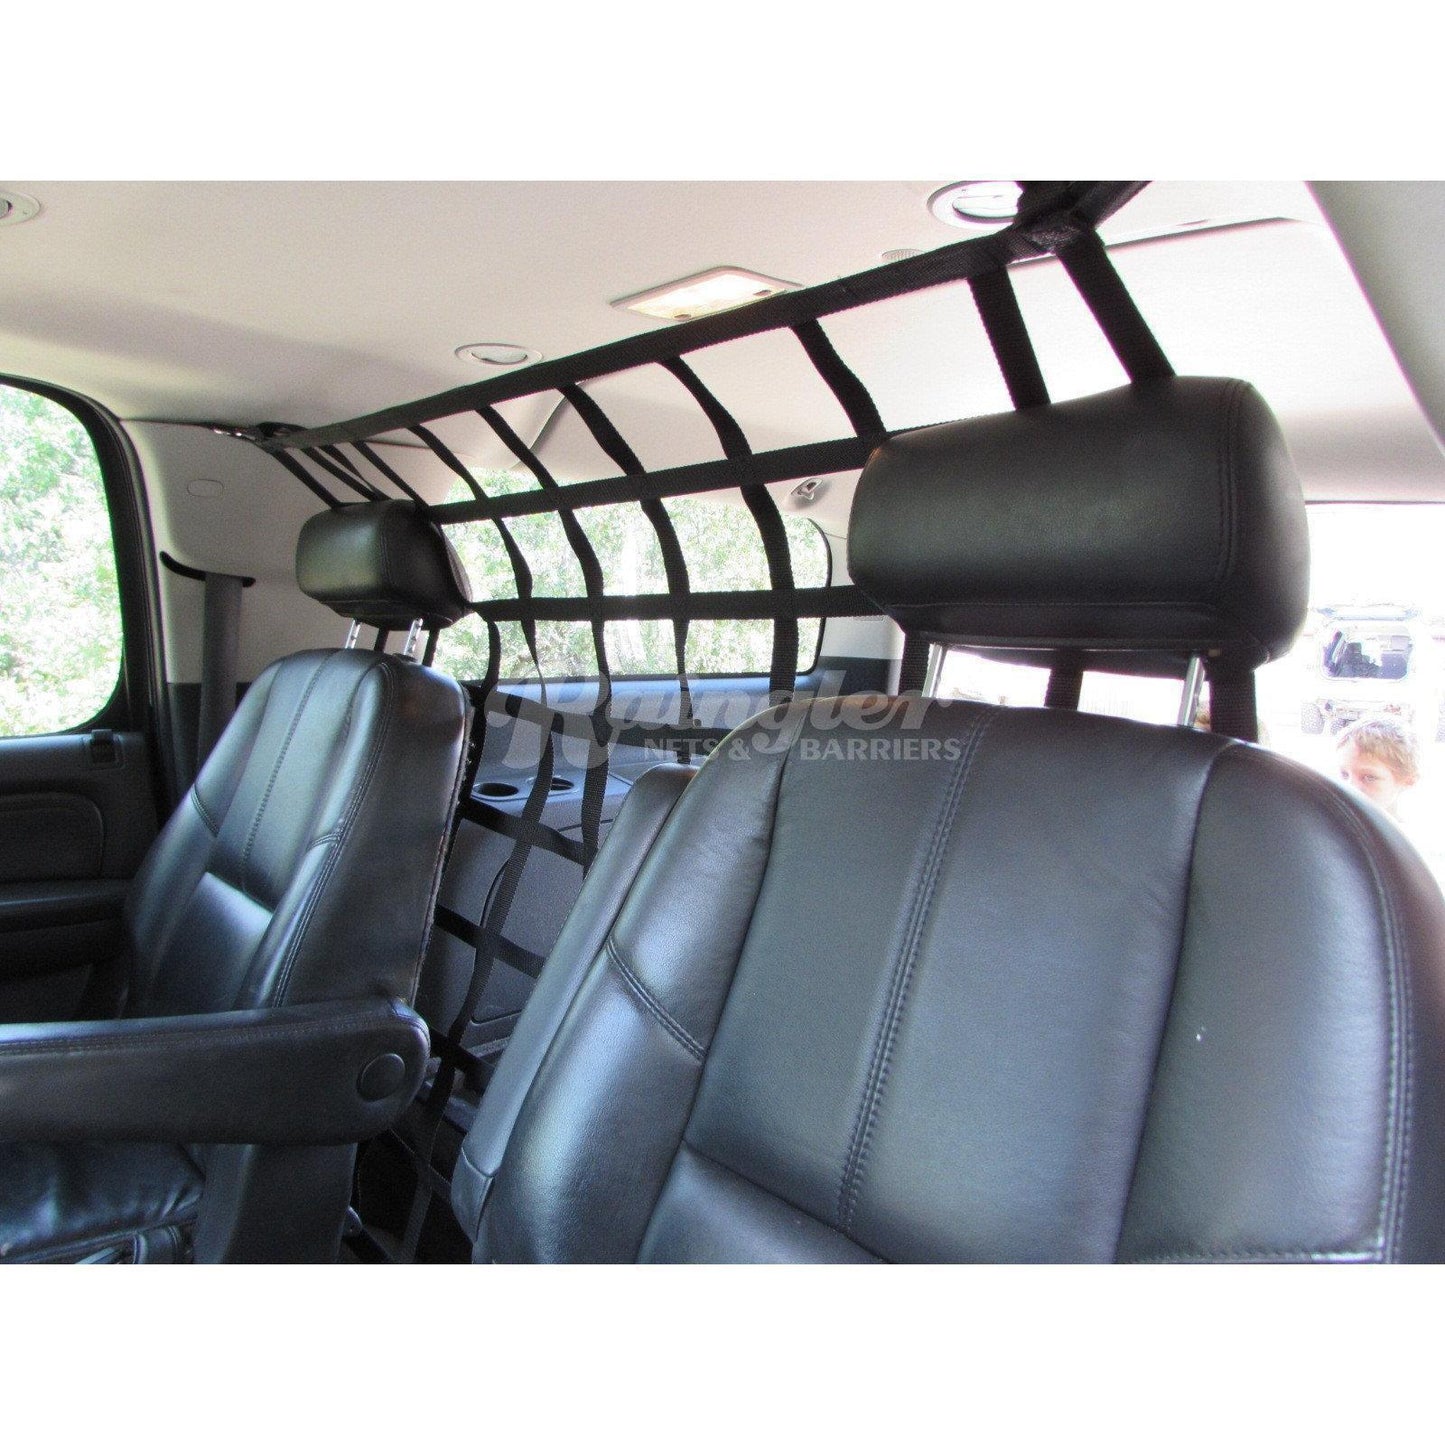 2011 - 2019 Ford Explorer Behind 2nd Row Seats Rear Barrier Divider Net-Raingler